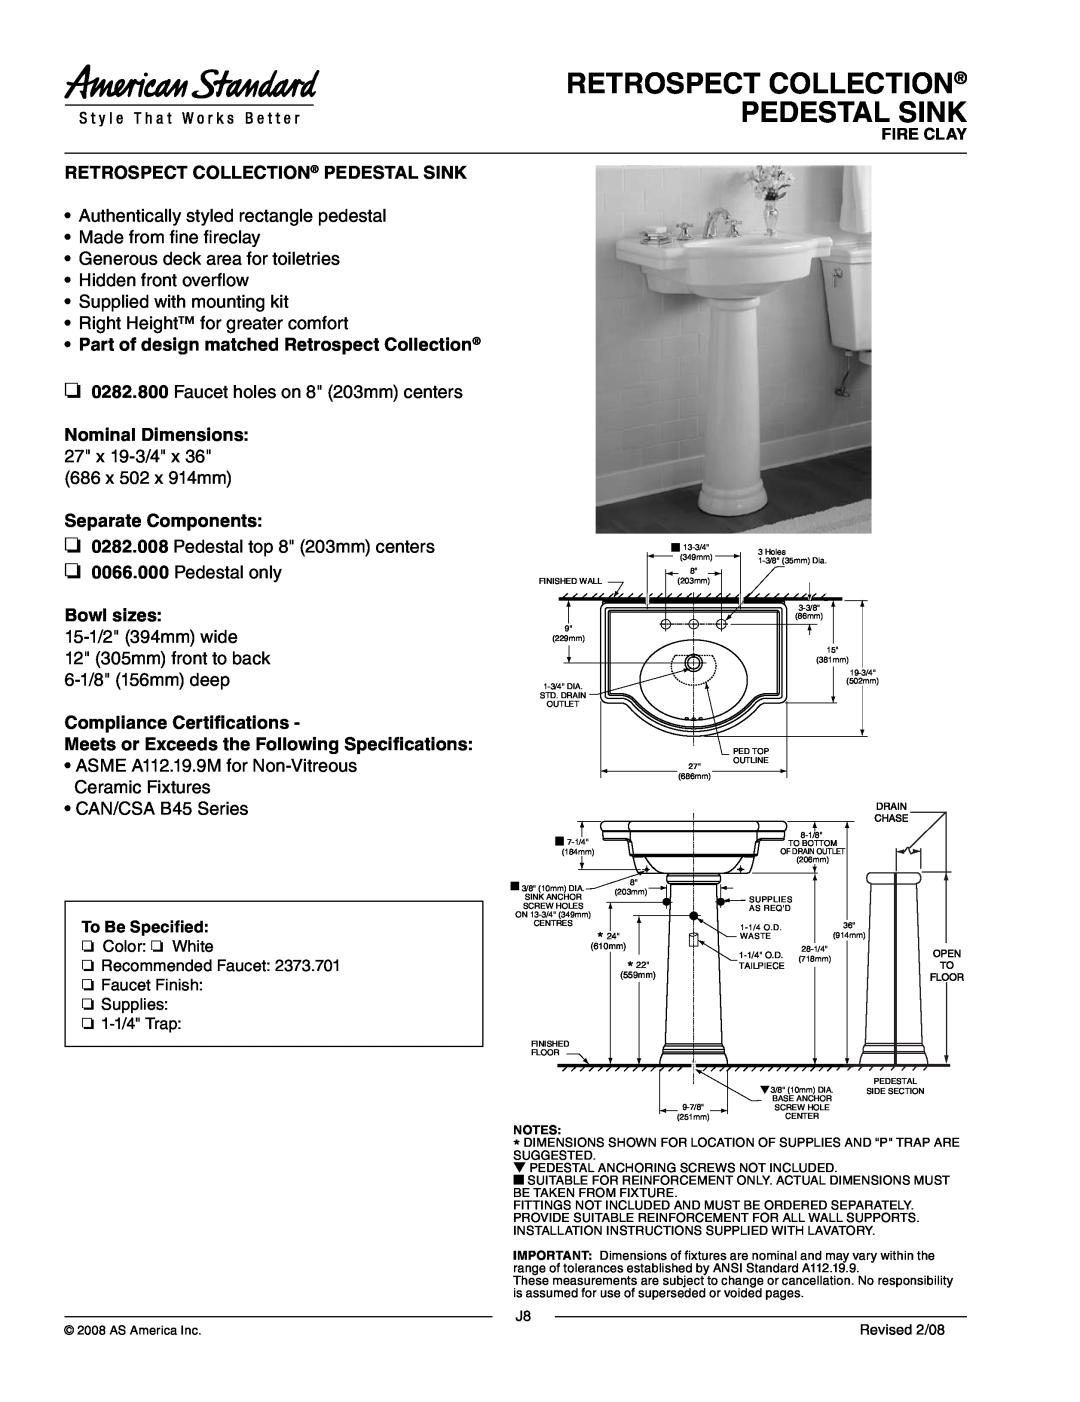 American Standard 0066.000 dimensions Retrospect Collection Pedestal Sink, Part of design matched Retrospect Collection 